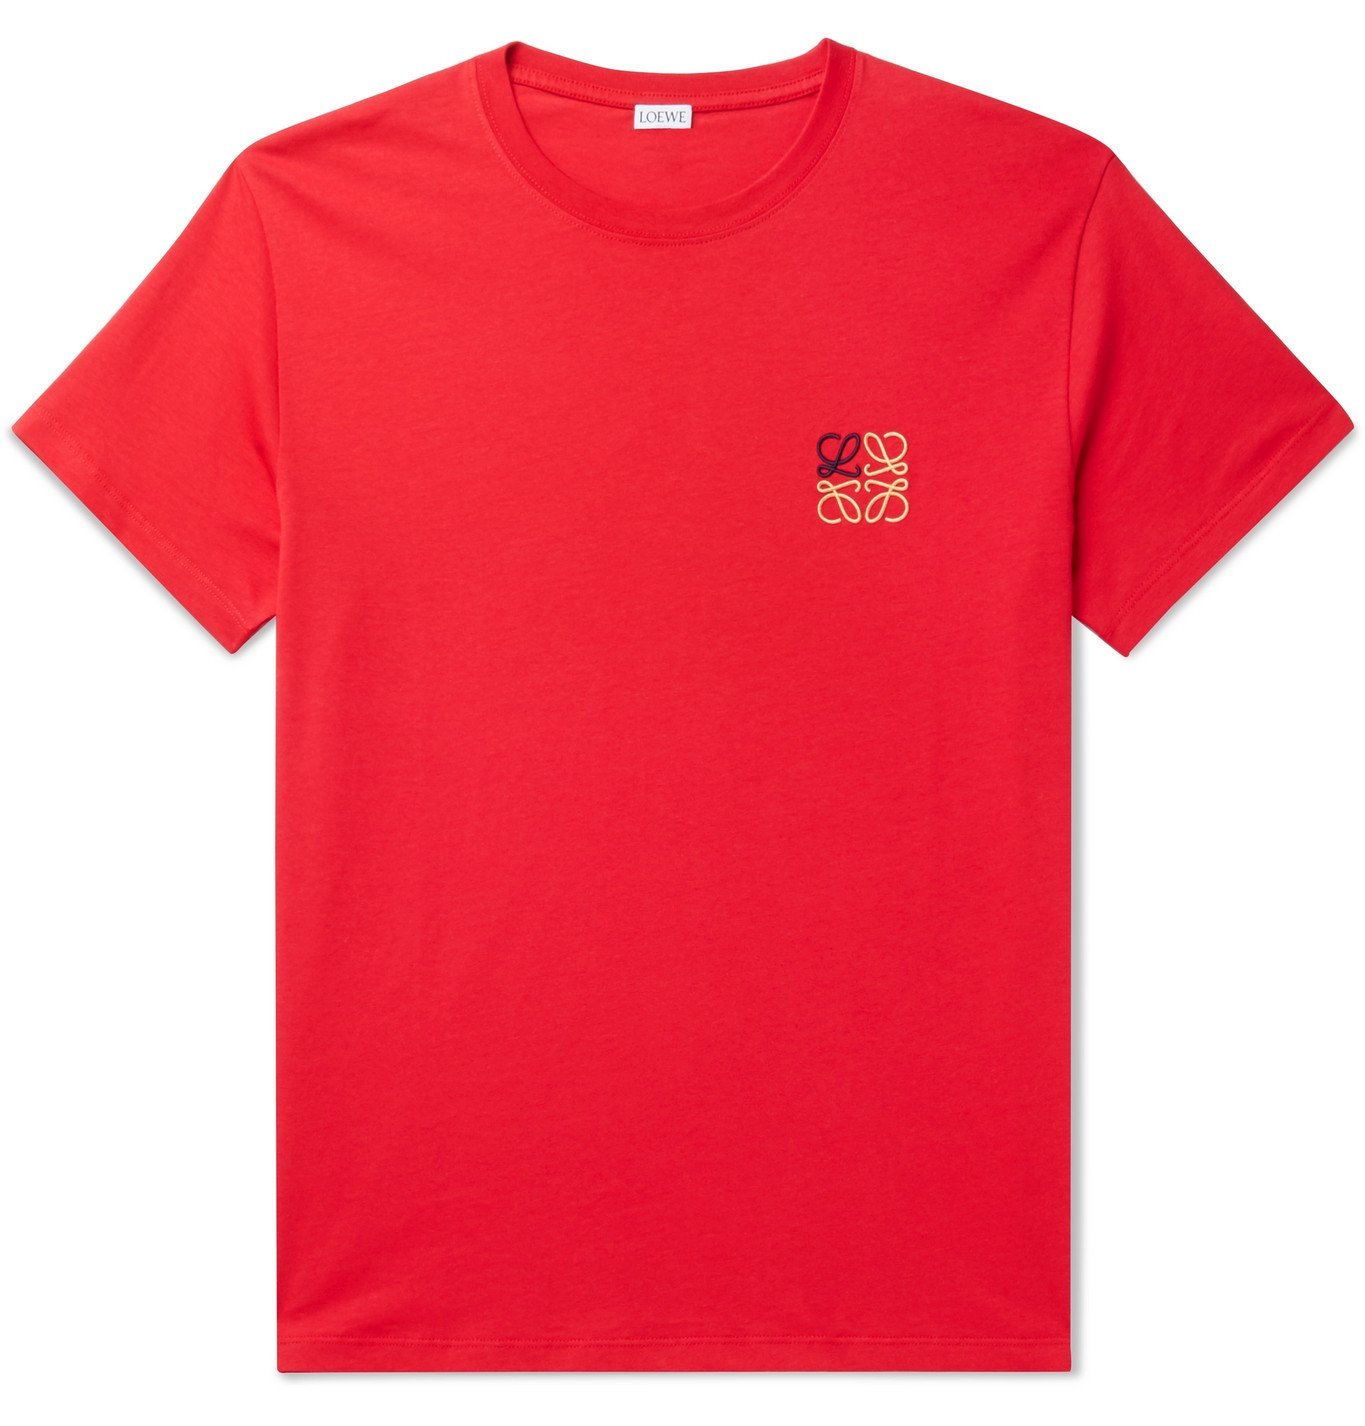 Loewe - Logo-Embroidered Cotton-Jersey T-Shirt - Red Loewe